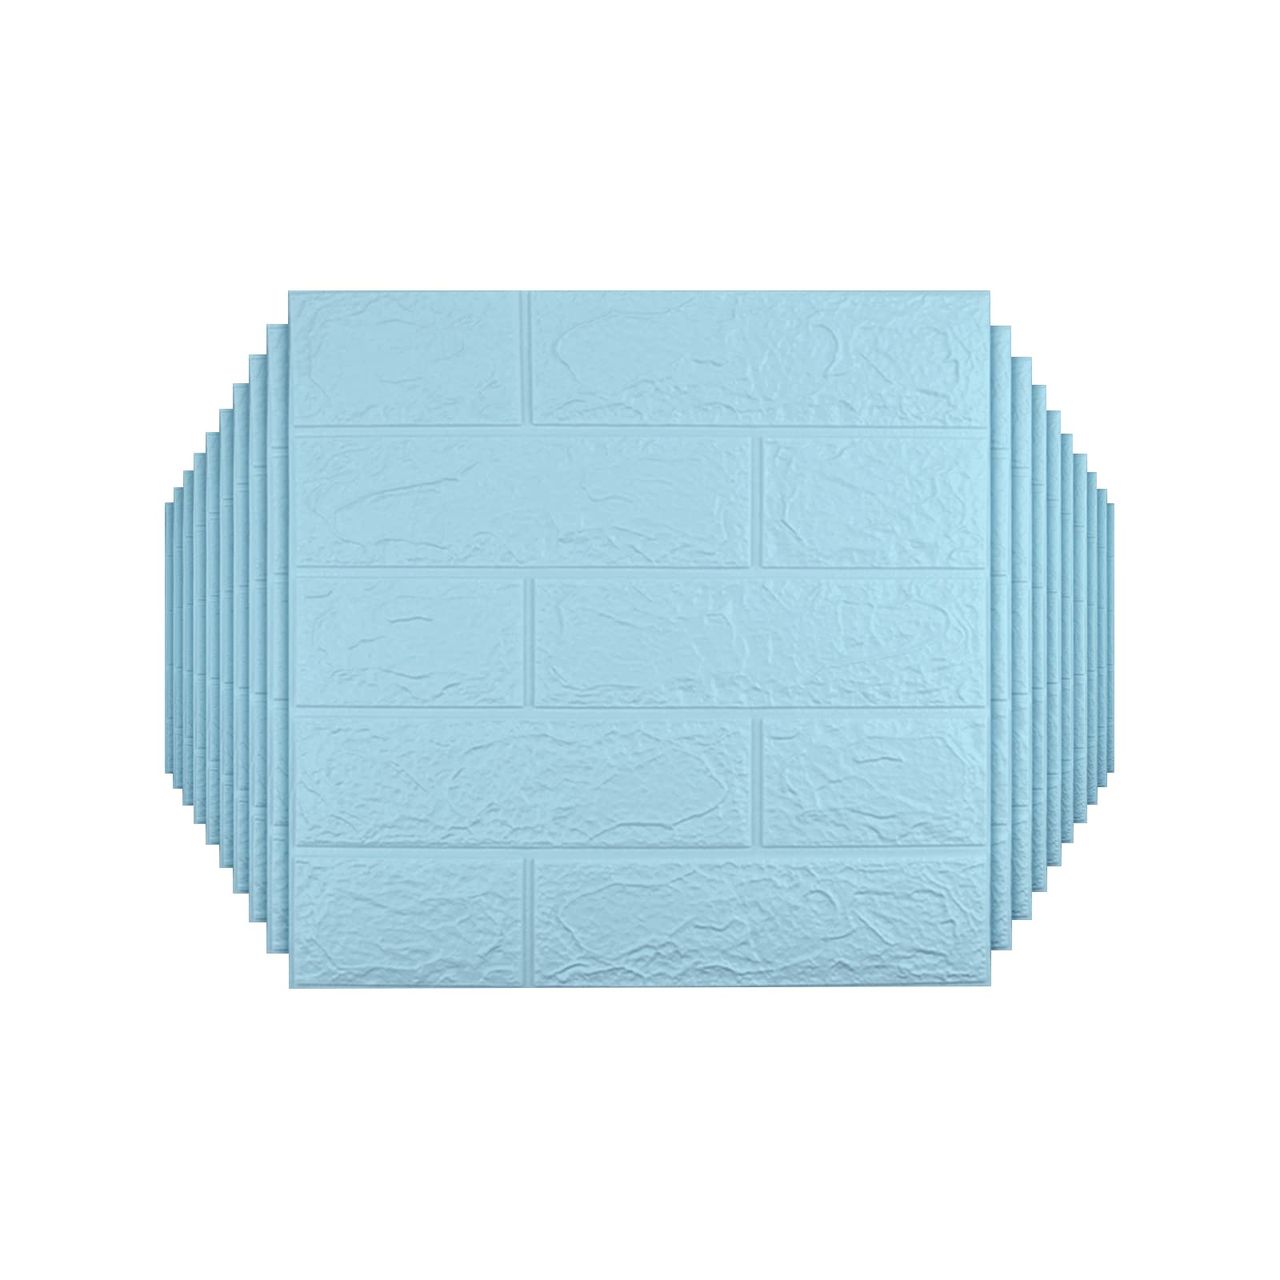 Sodeno 3D壁紙 40枚セット クッションシート リメイクシート 壁紙リフォーム 立体シール レンガ調 貼付簡単 模様替え 防水 カット可能 簡単DIY インテリアシート ウォールステッカー リビング キッチン (青)